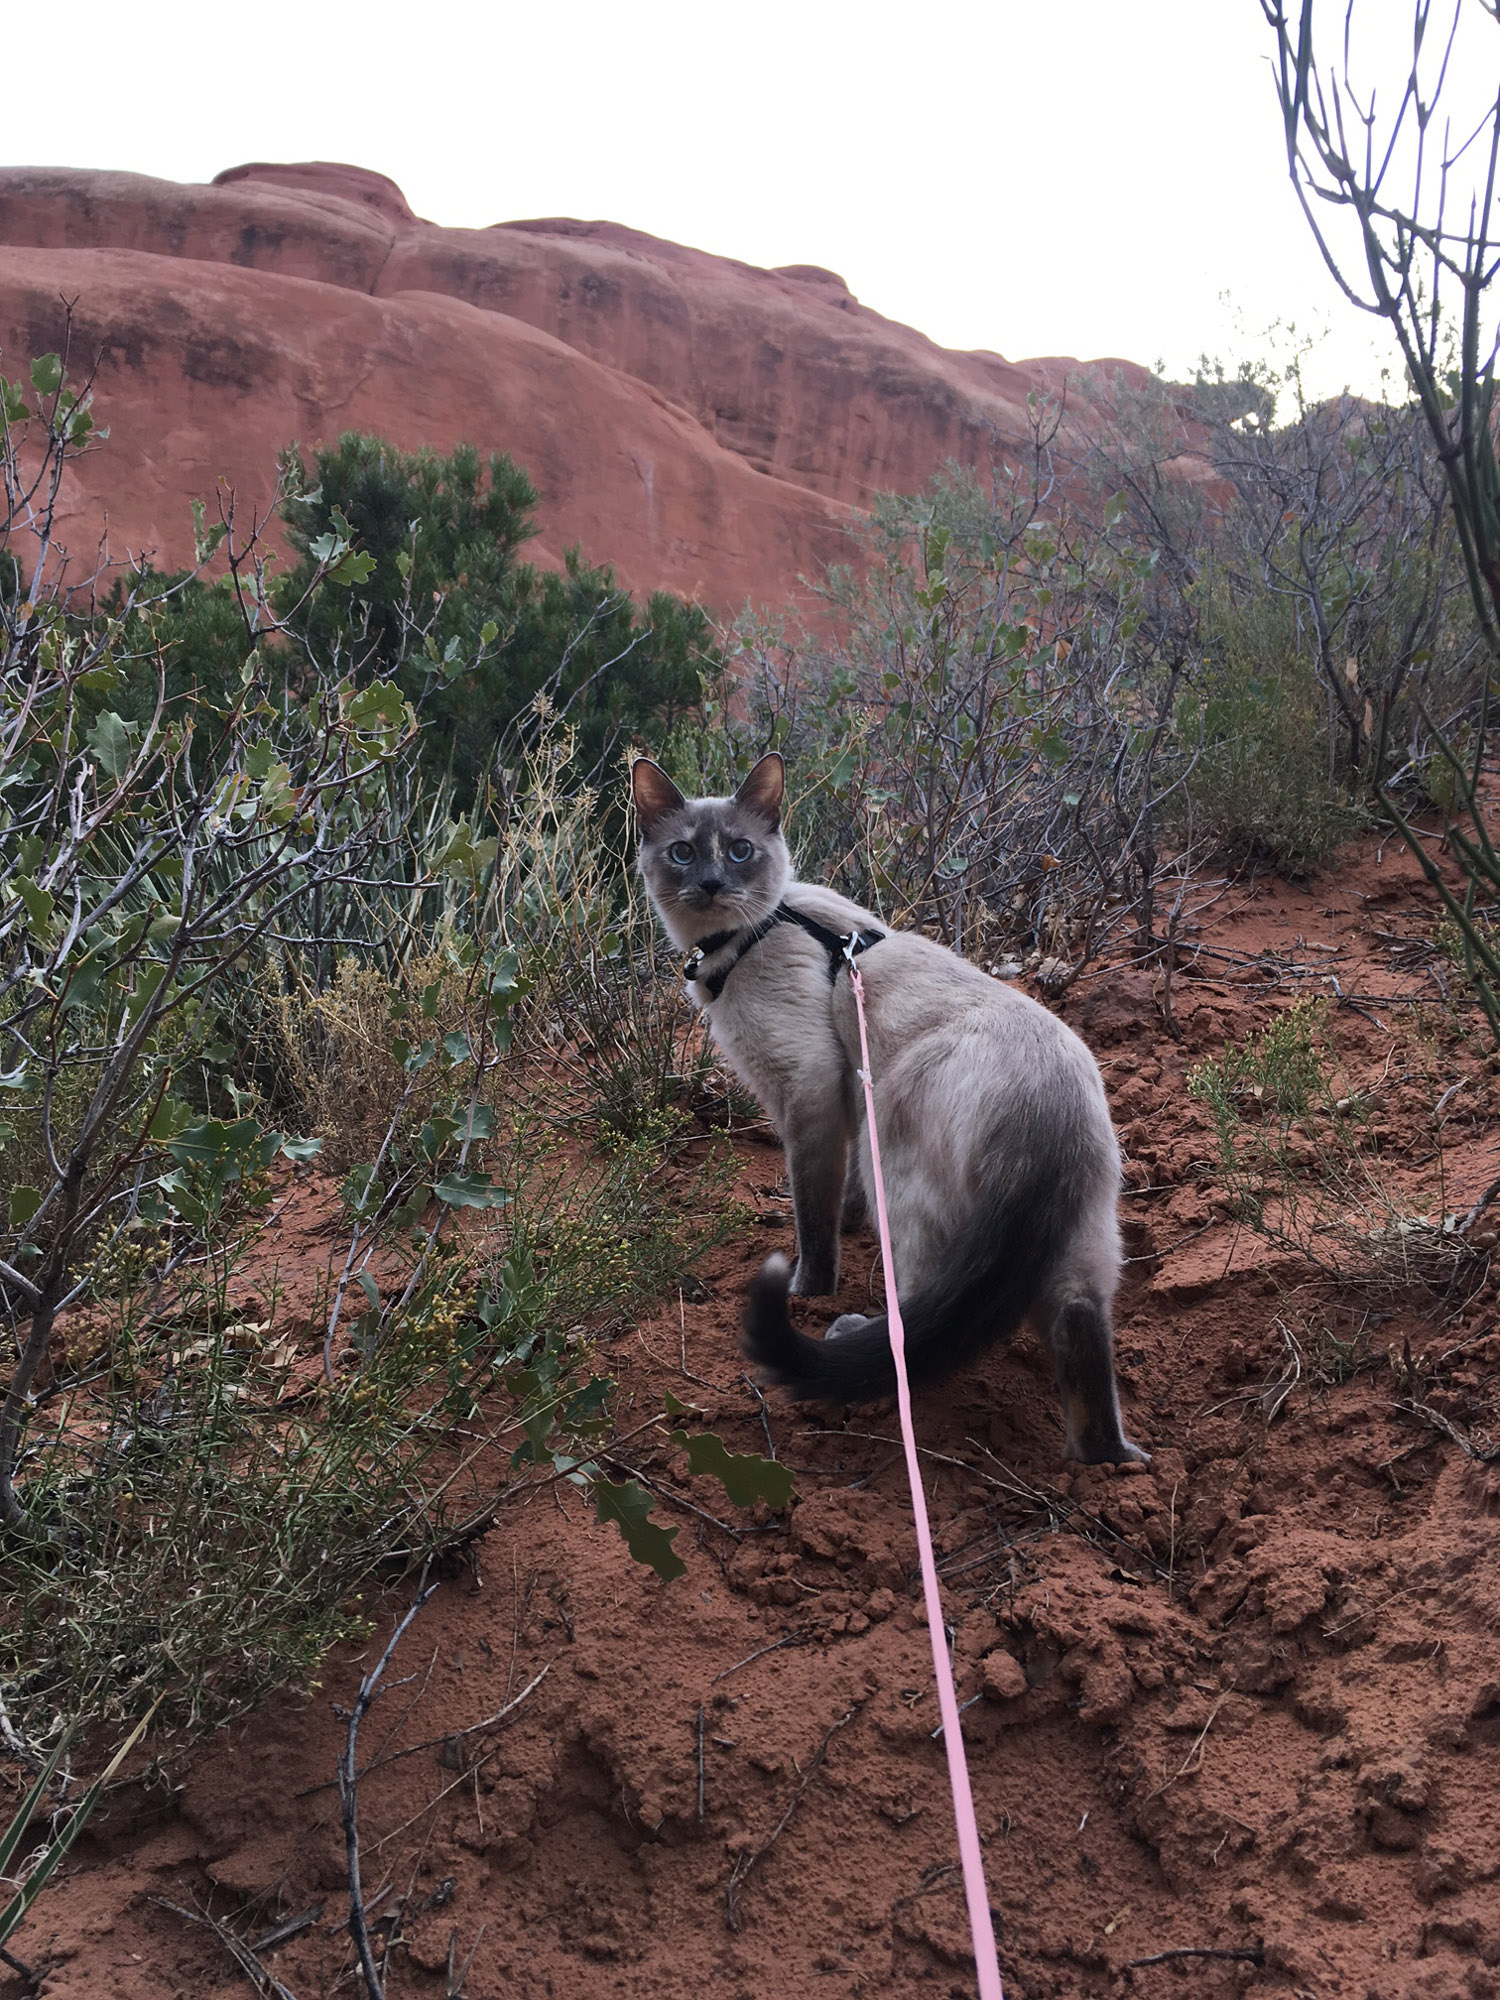 Tuna adventure cat on a hike